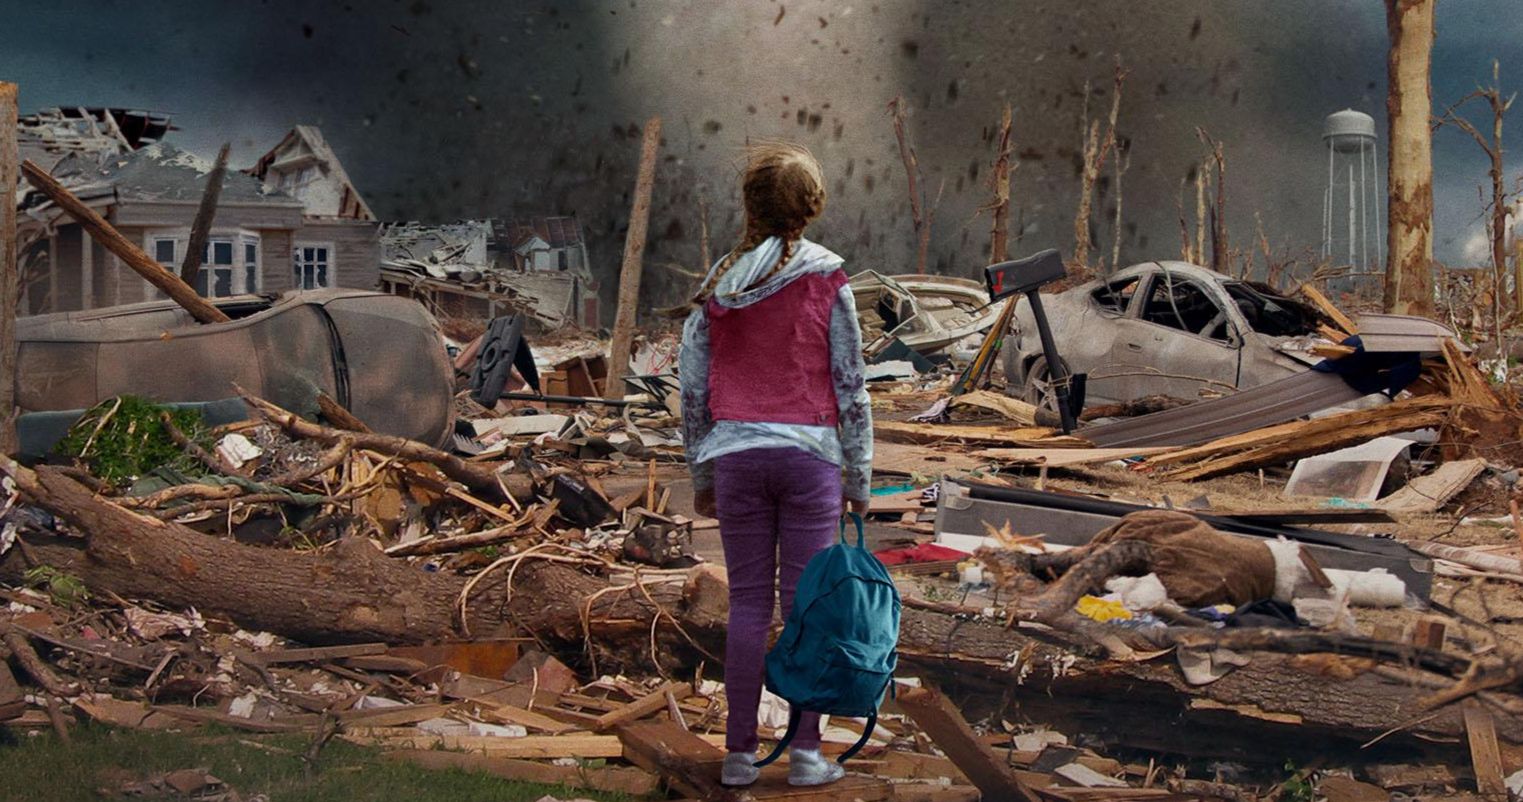 13 Minutes Trailer: Trace Adkins Battles a Tornado as It Tears Through the Heartland